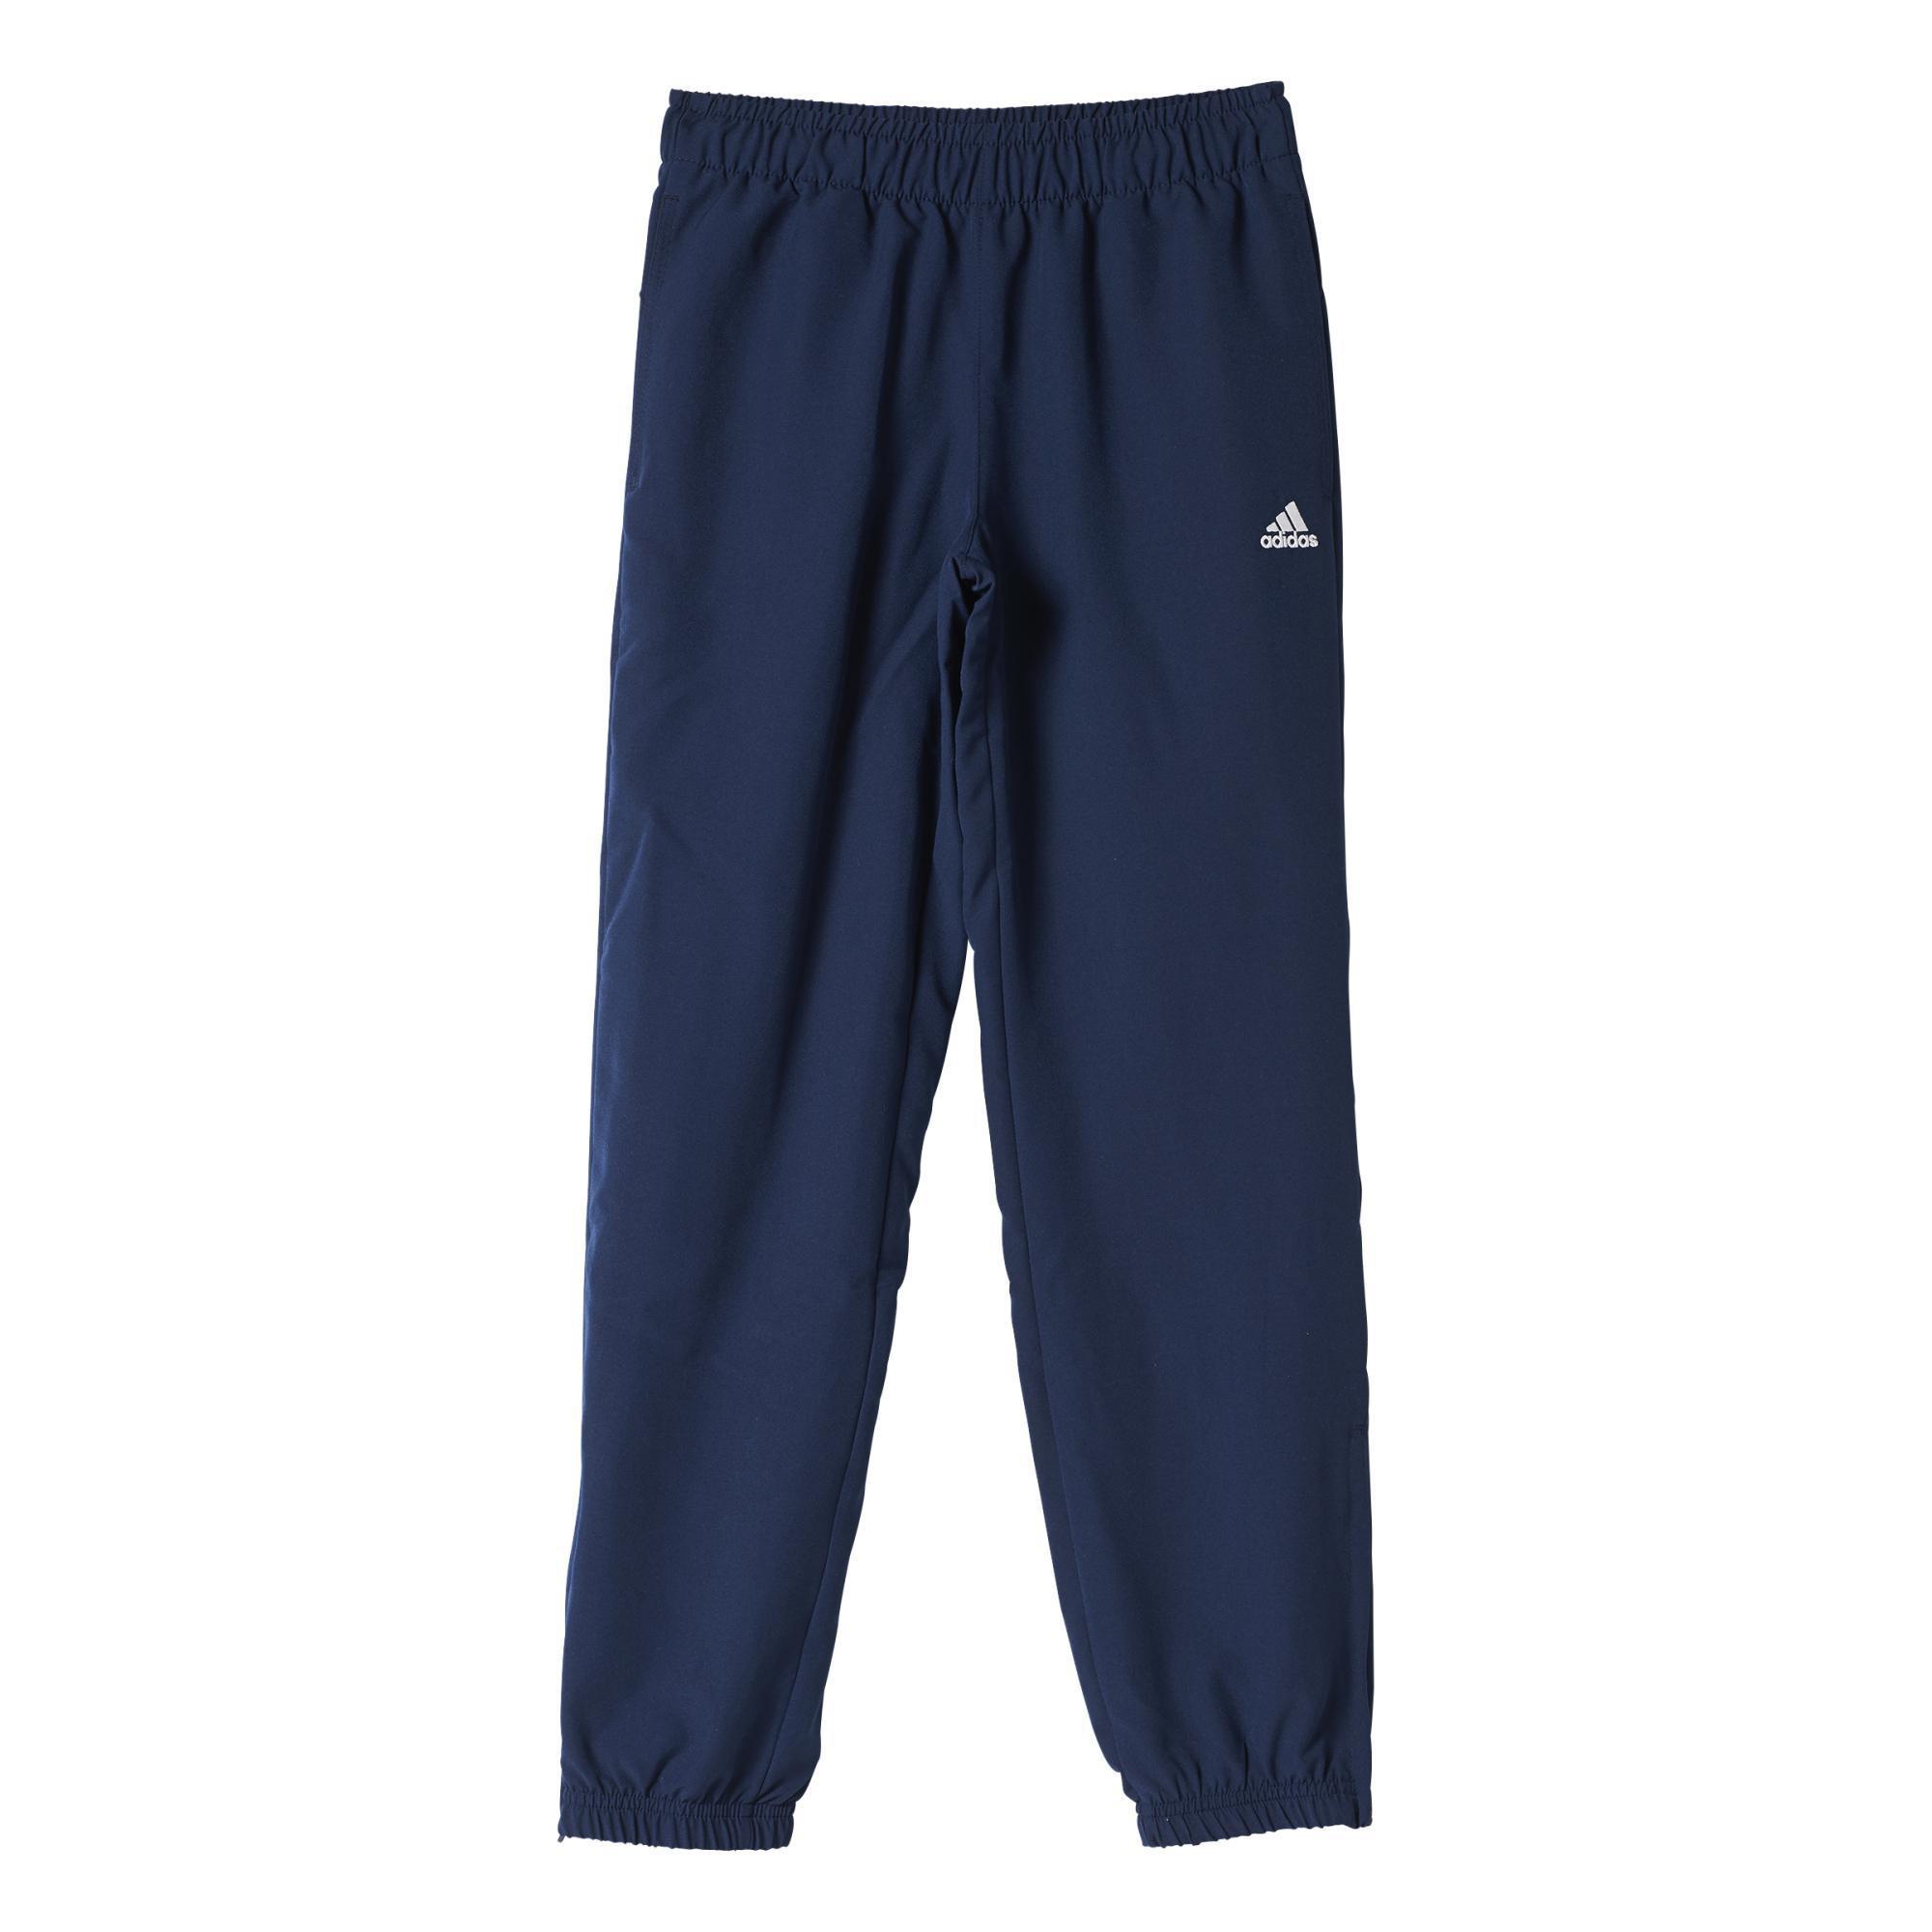 Adidas Kids Essential Stanford Pants - Collegiate Navy - Tennisnuts.com